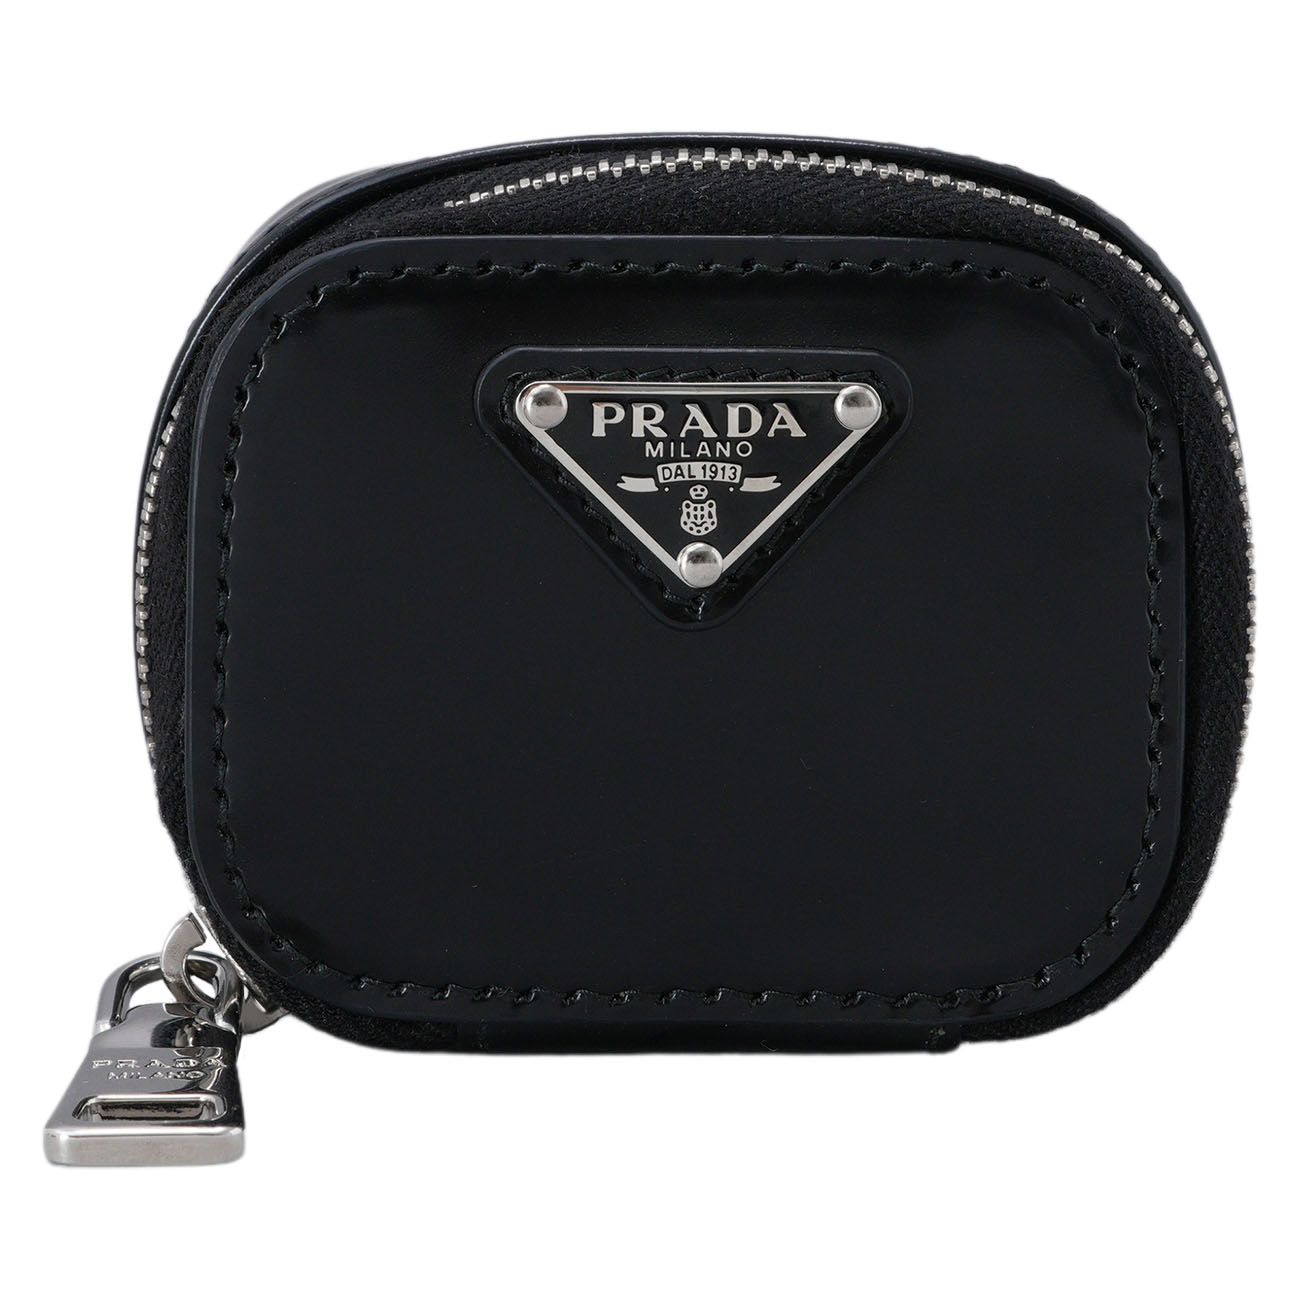 PRADA(USED)프라다 암밴드 파우치 ETL439